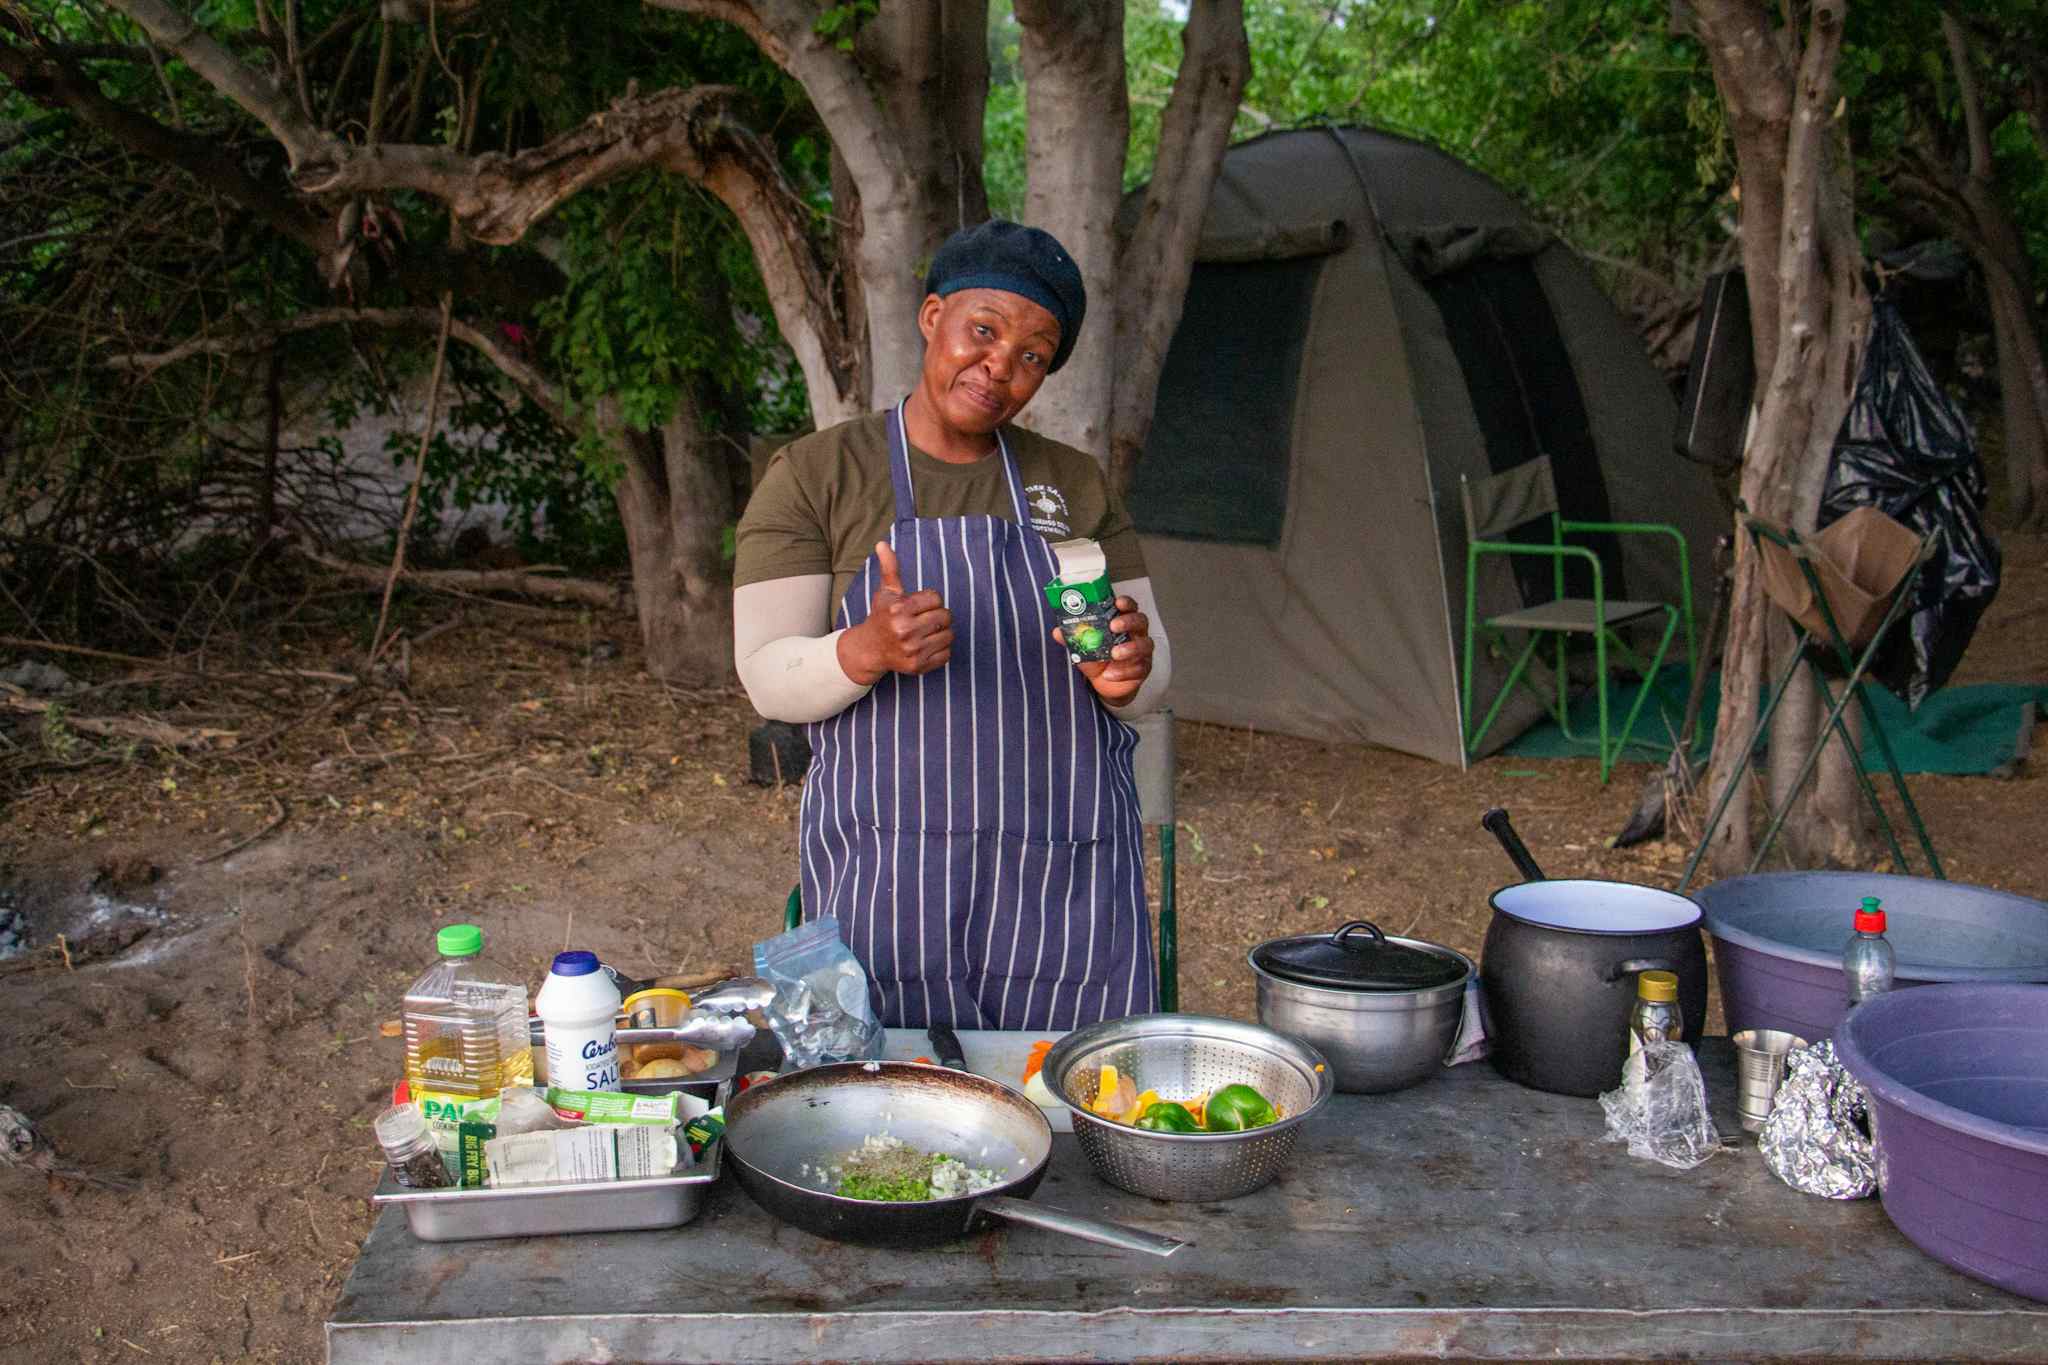 Chef in the Okavango Delta, Botswana
Staff image: Chris Kearney